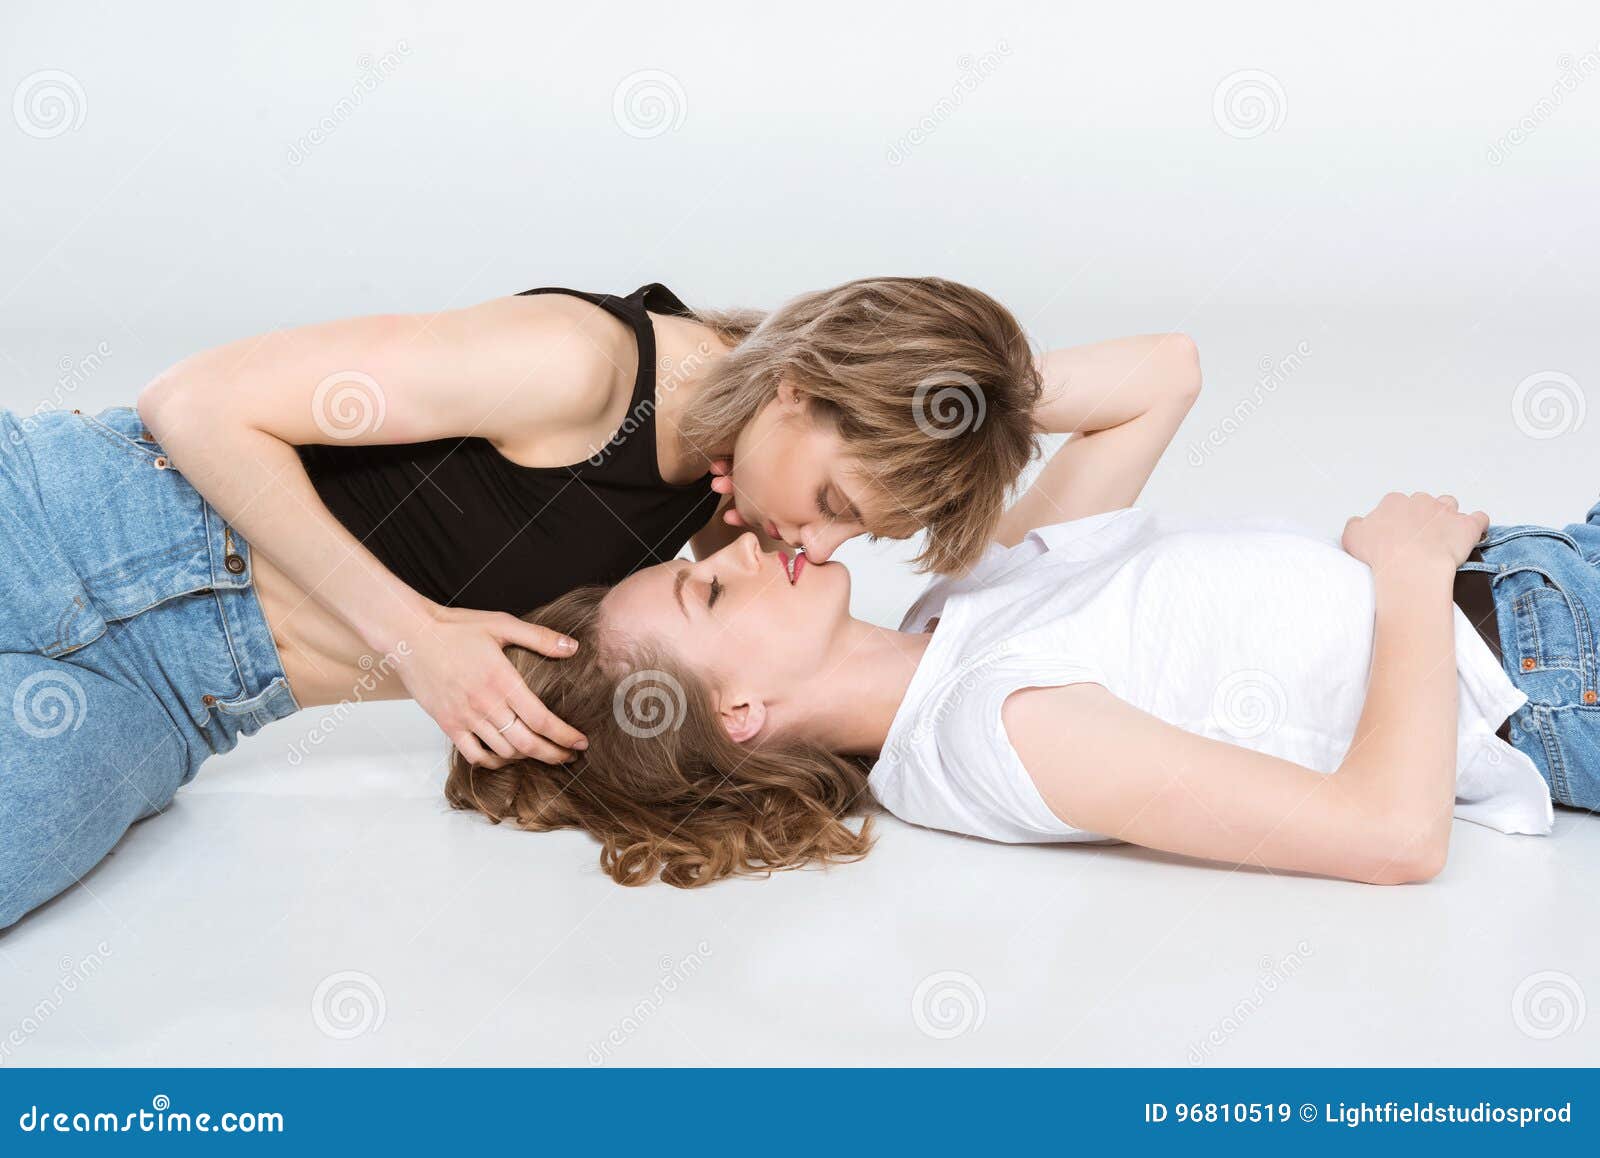 Lesbians Kissing Sucking Tits